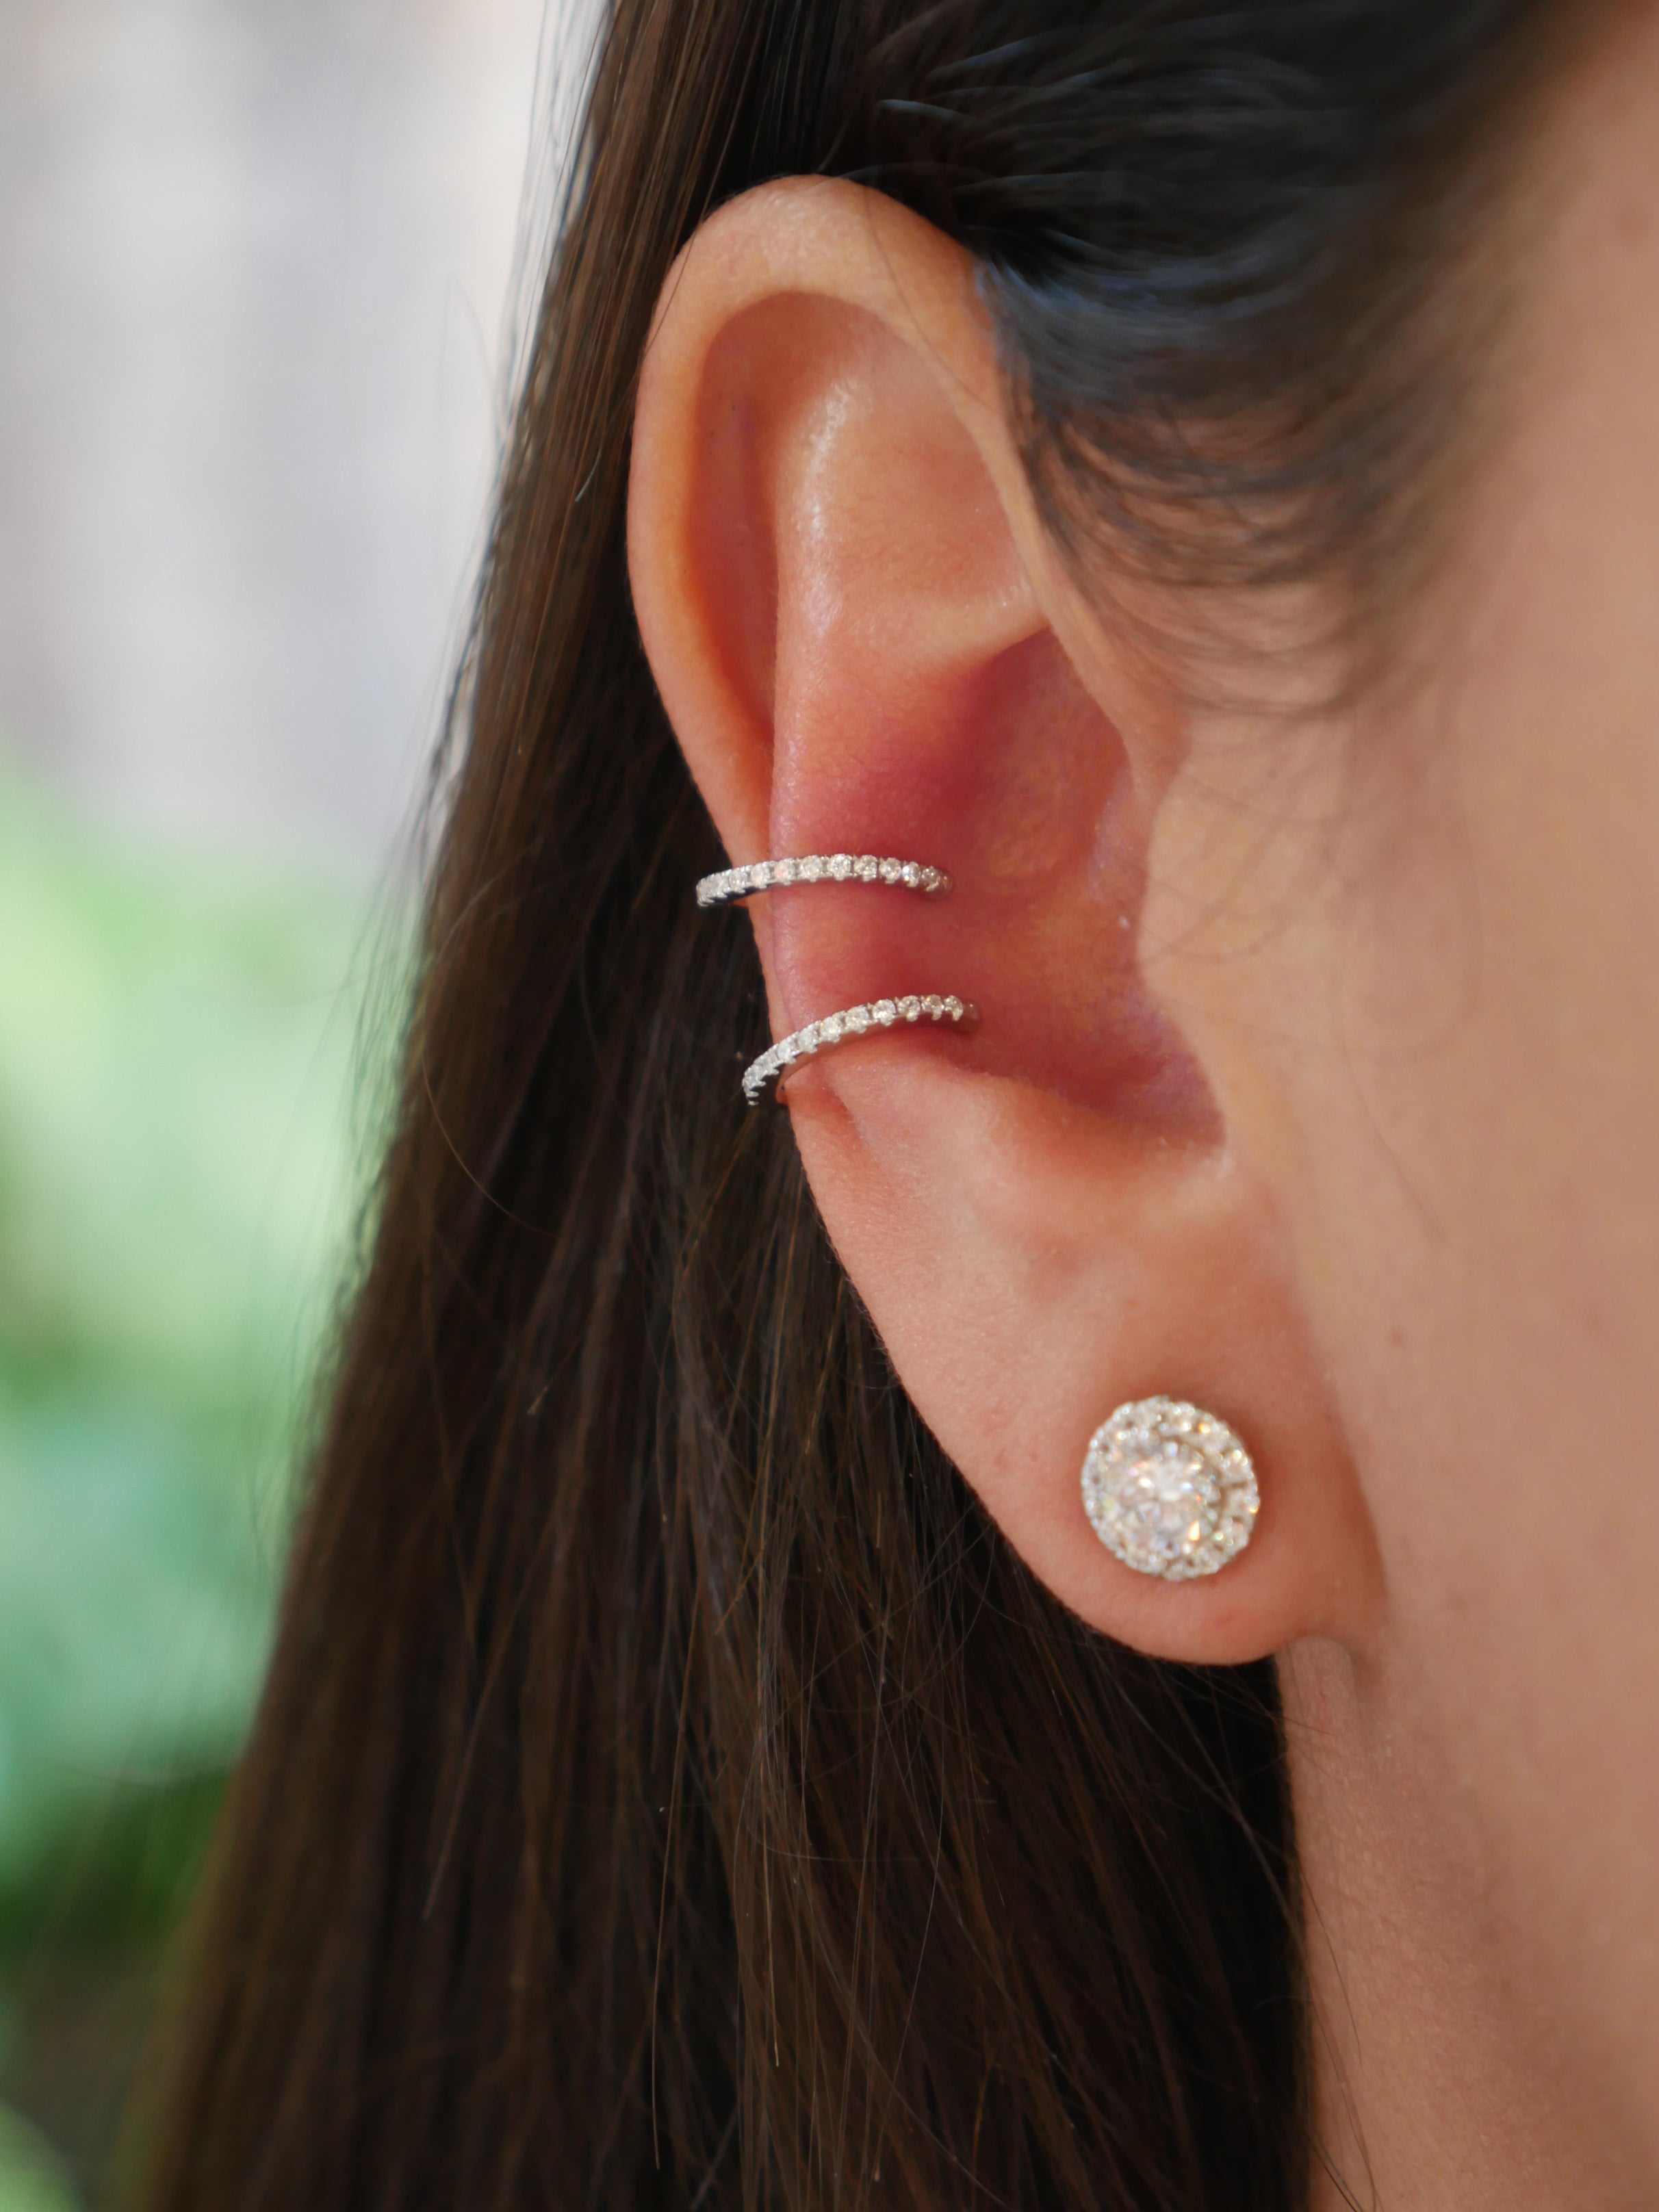 Everyday Ear Cuffs, XL Mid-Ear Diamond CZ .925 Sterling Silver Ear Cuffs  Non Pierced Conch Earrings | KesleyBoutique | Reviews on